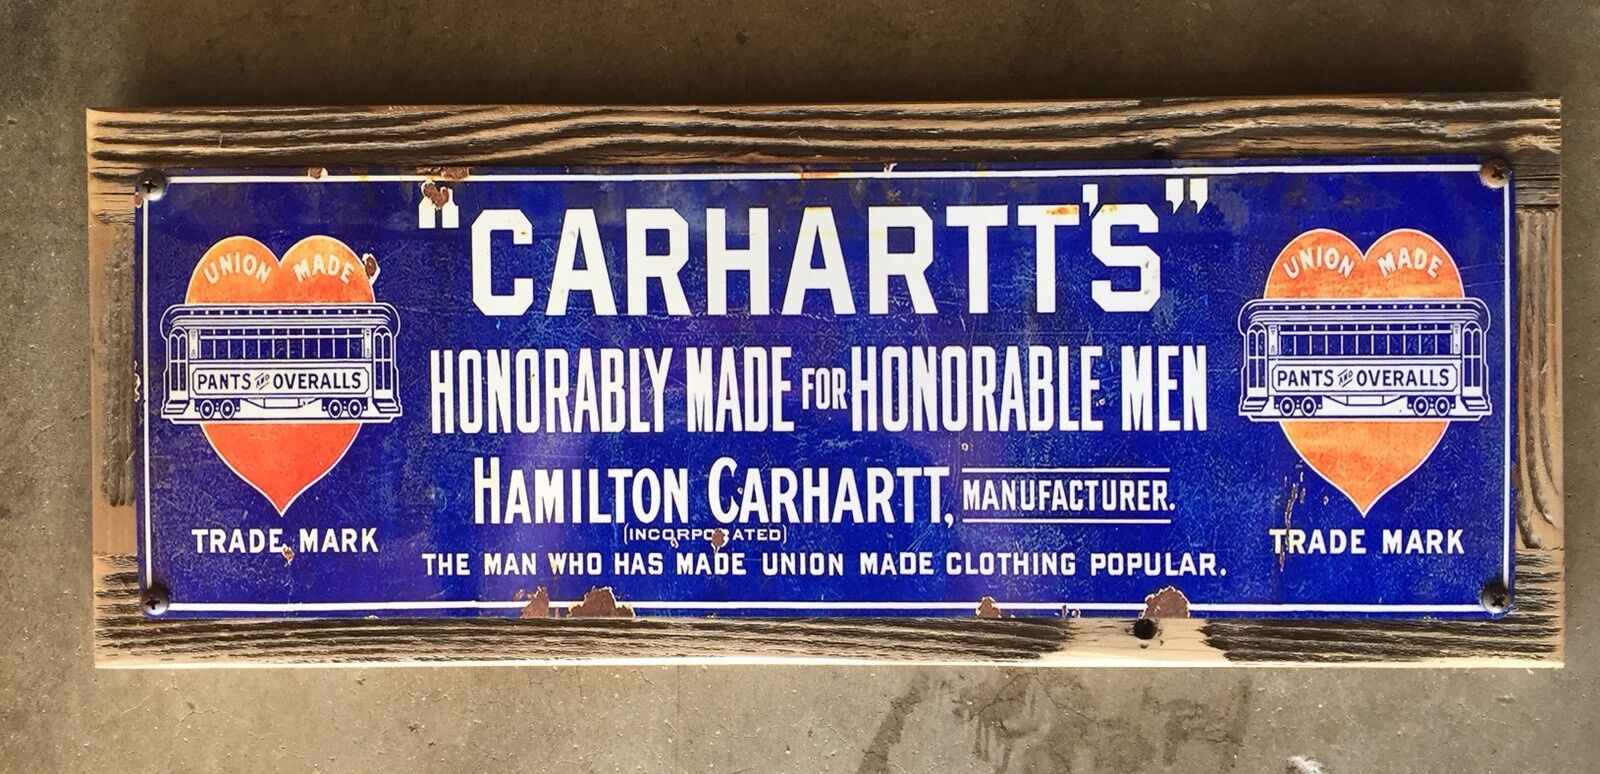 Carhartt Denim Blue Jeans Workwear Farm Vintage Advertising Framed Steel Sign